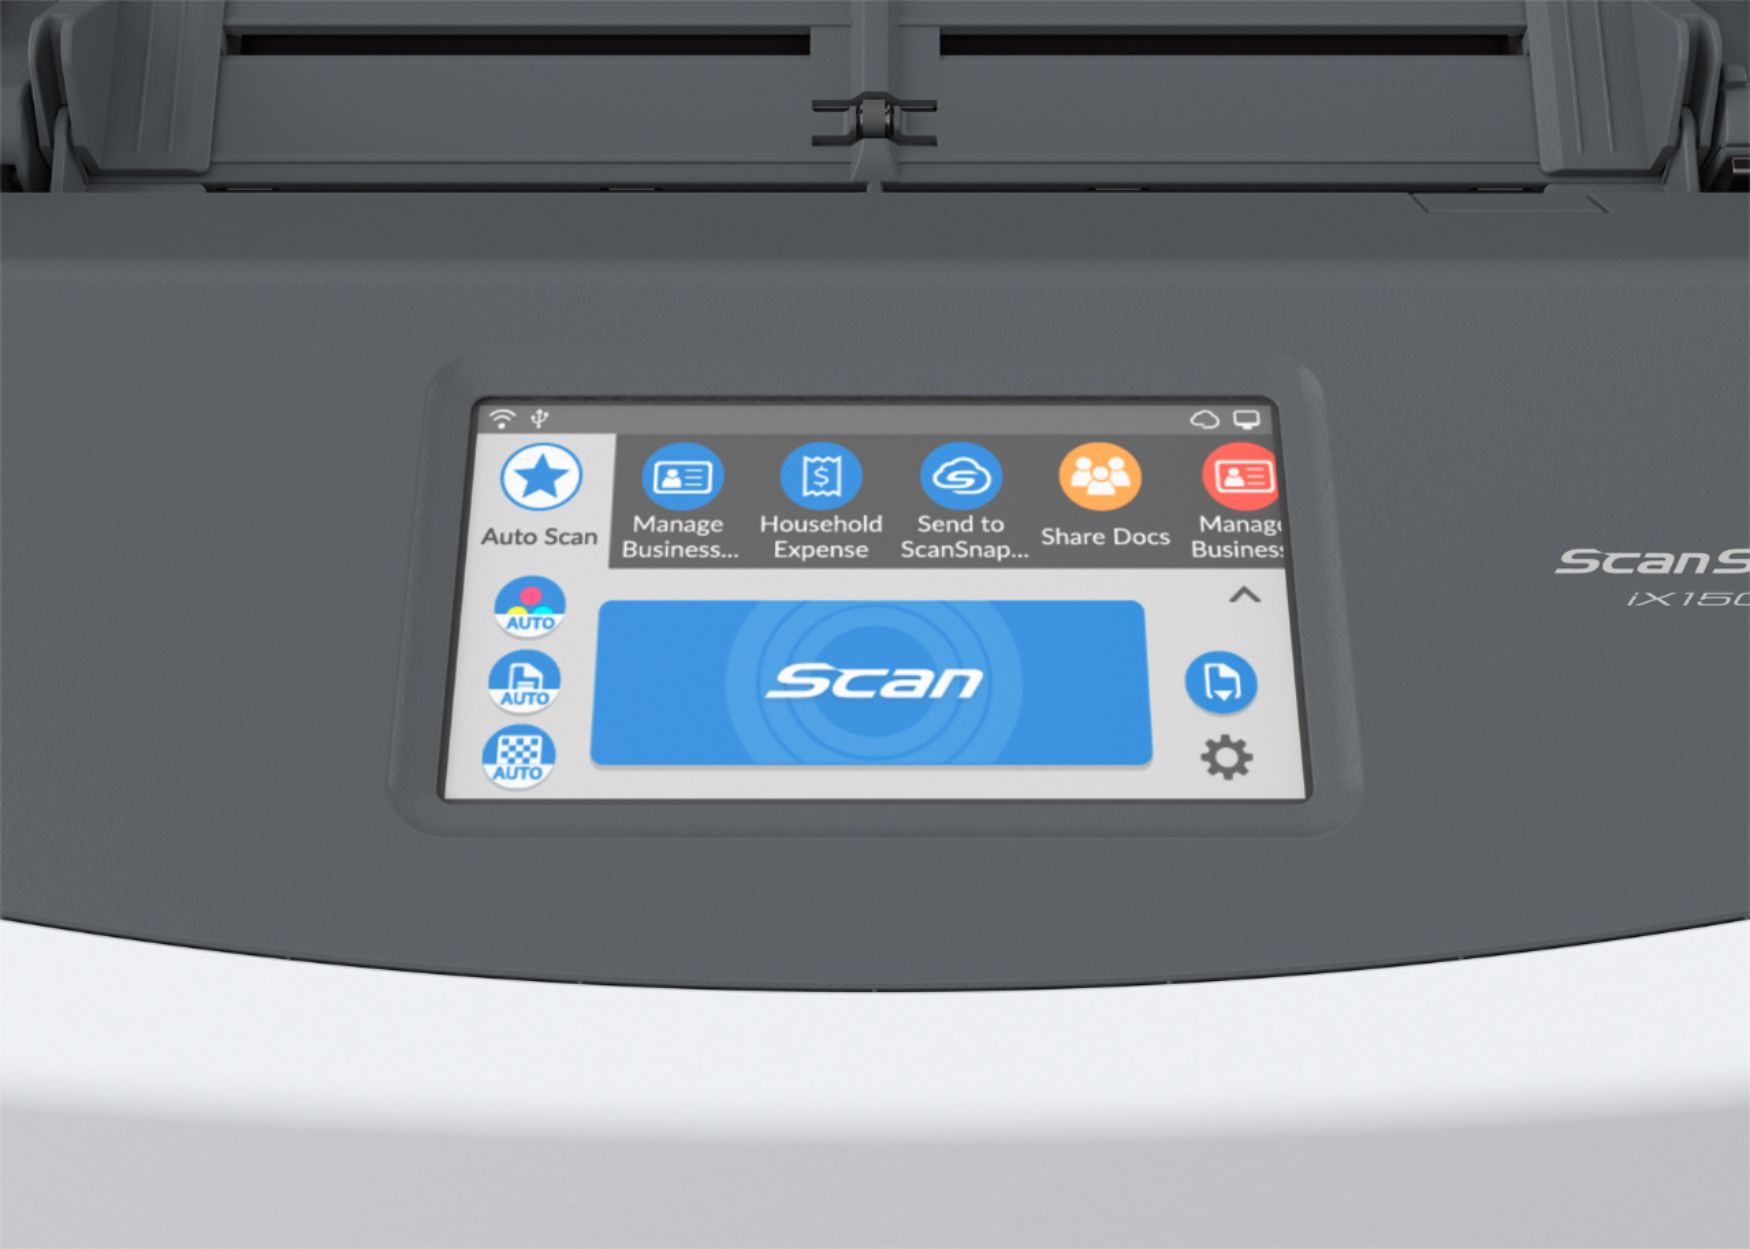 Best Buy: Fujitsu ScanSnap iX1500 Desktop Scanner White/Gray